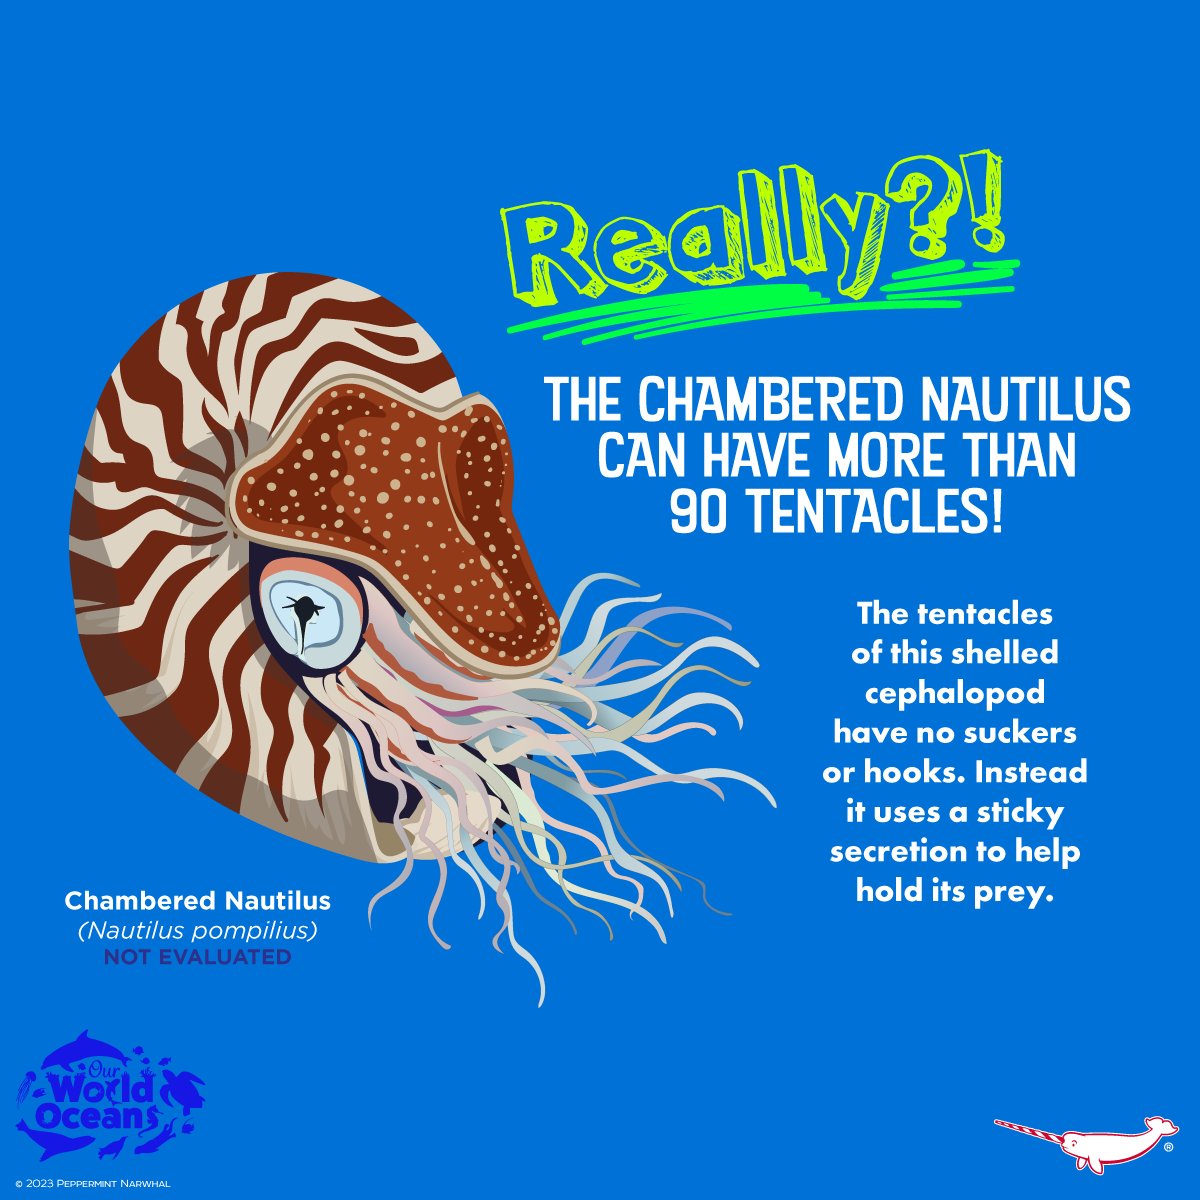 #REALLY #ChamberedNautilus
#CephalopodWeek 
#OurWorldOceansMonth

Shop #PeppermintNarwhal
peppermintnarwhal.com

#Cephalopod  #Nautilus #OurWorldOceans #OceanMonth #Ocean